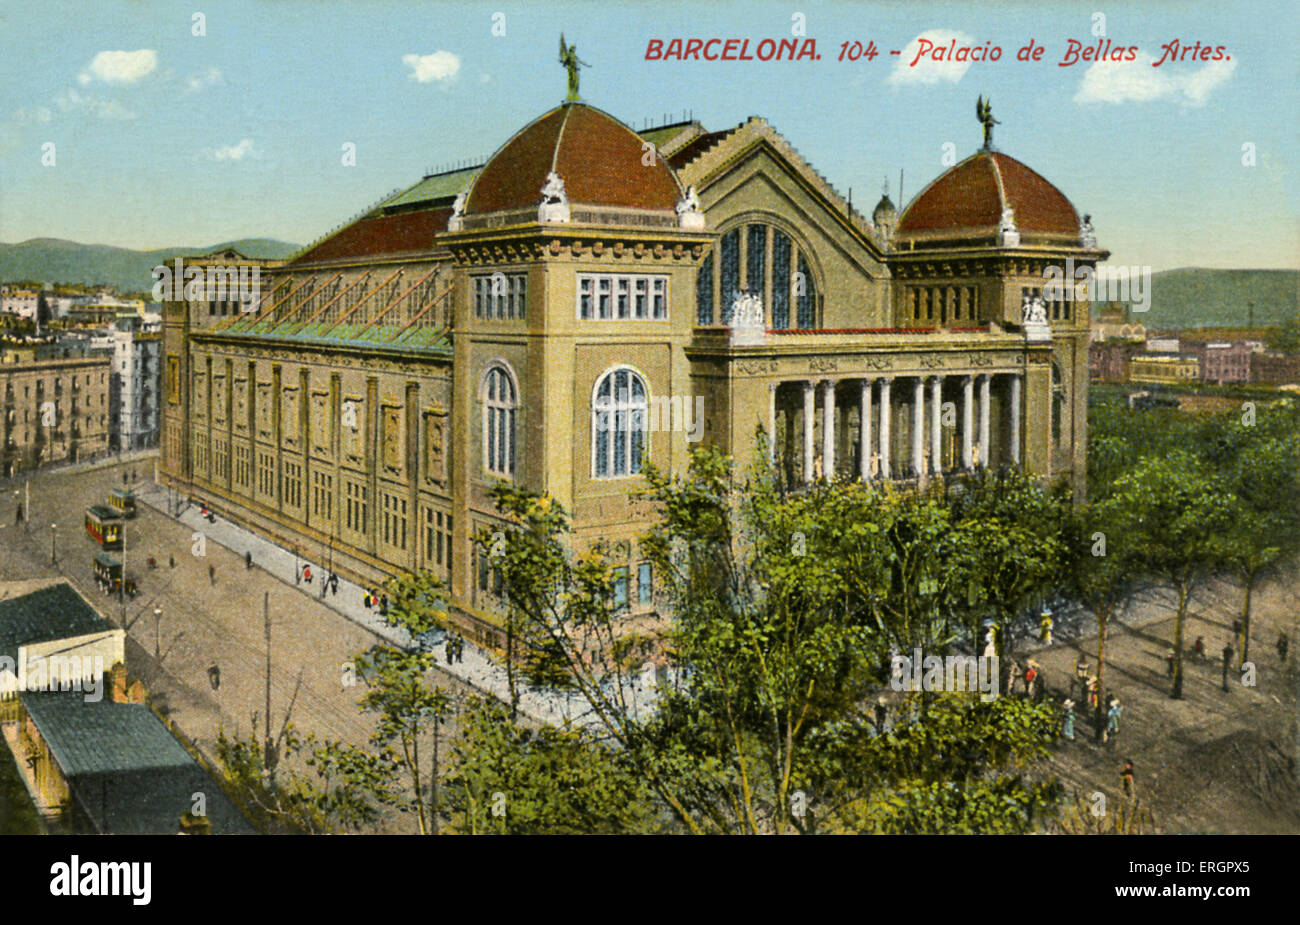 Palacio de Bella Artes / Palace of Fine Arts, Barcelona, Spain. Early 20th century view. Stock Photo